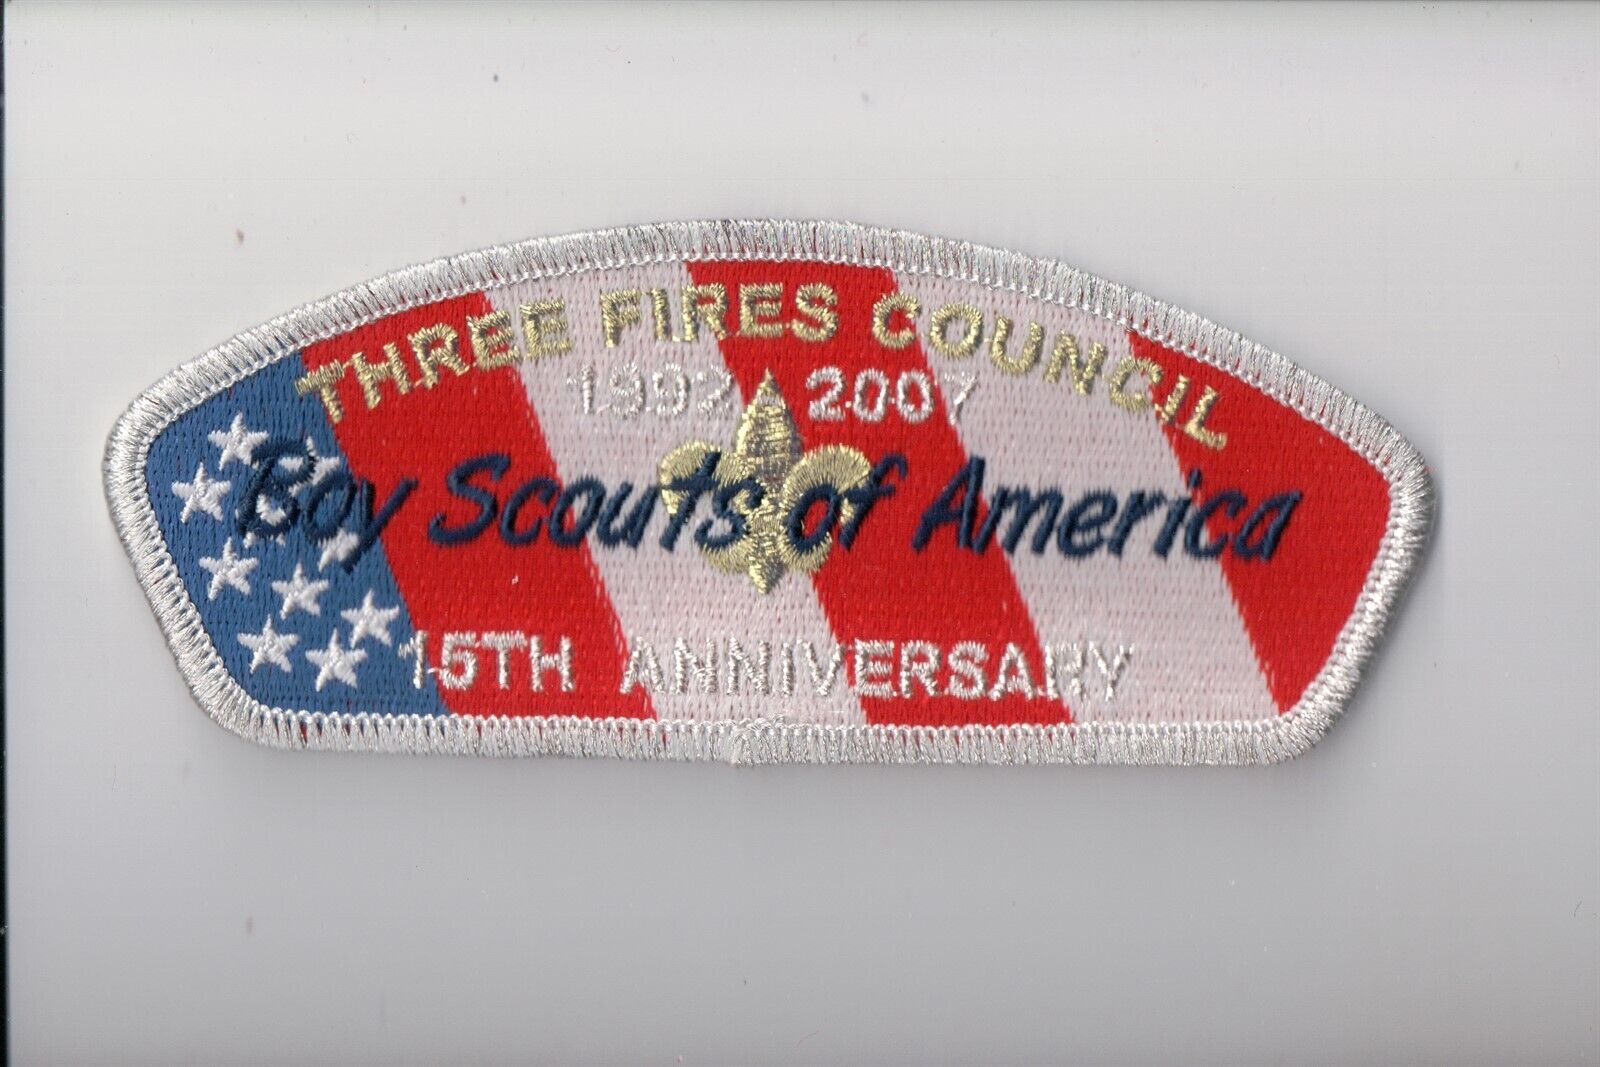 Three Fires Council SA-41 15th Anniversary CSP